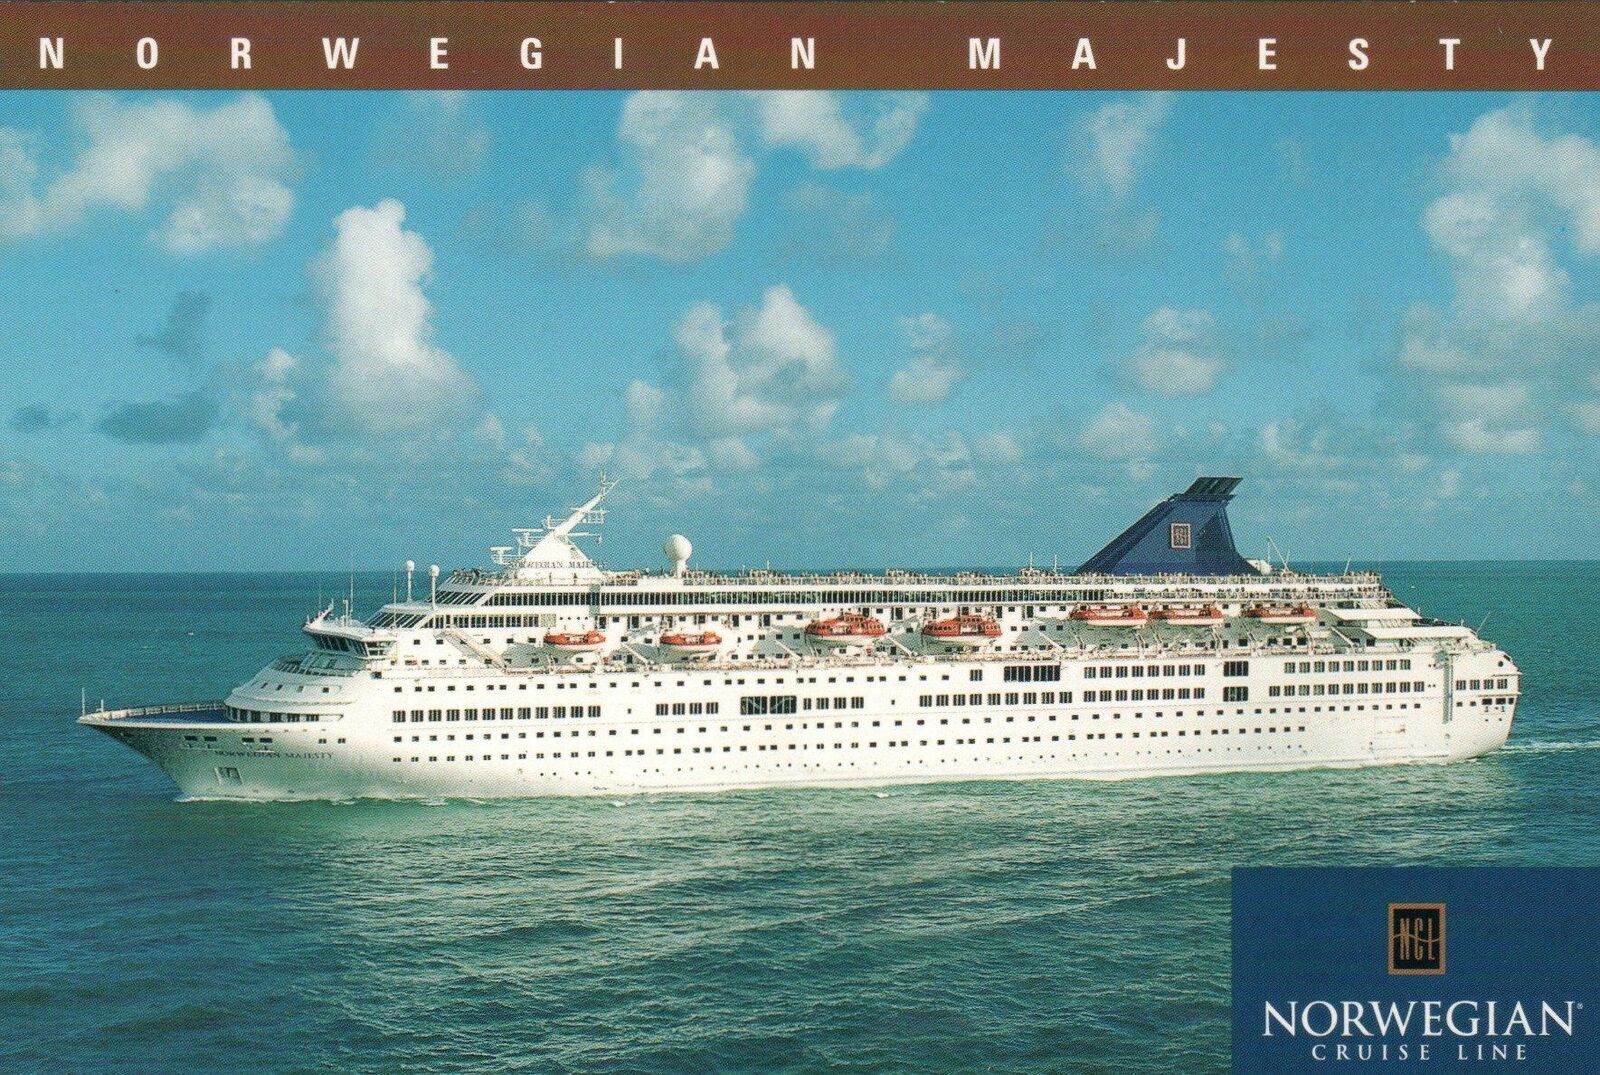 Norwegian Cruise Line NORWEGIAN MAJESTY POSTCARD - EXCELLENT as NEW